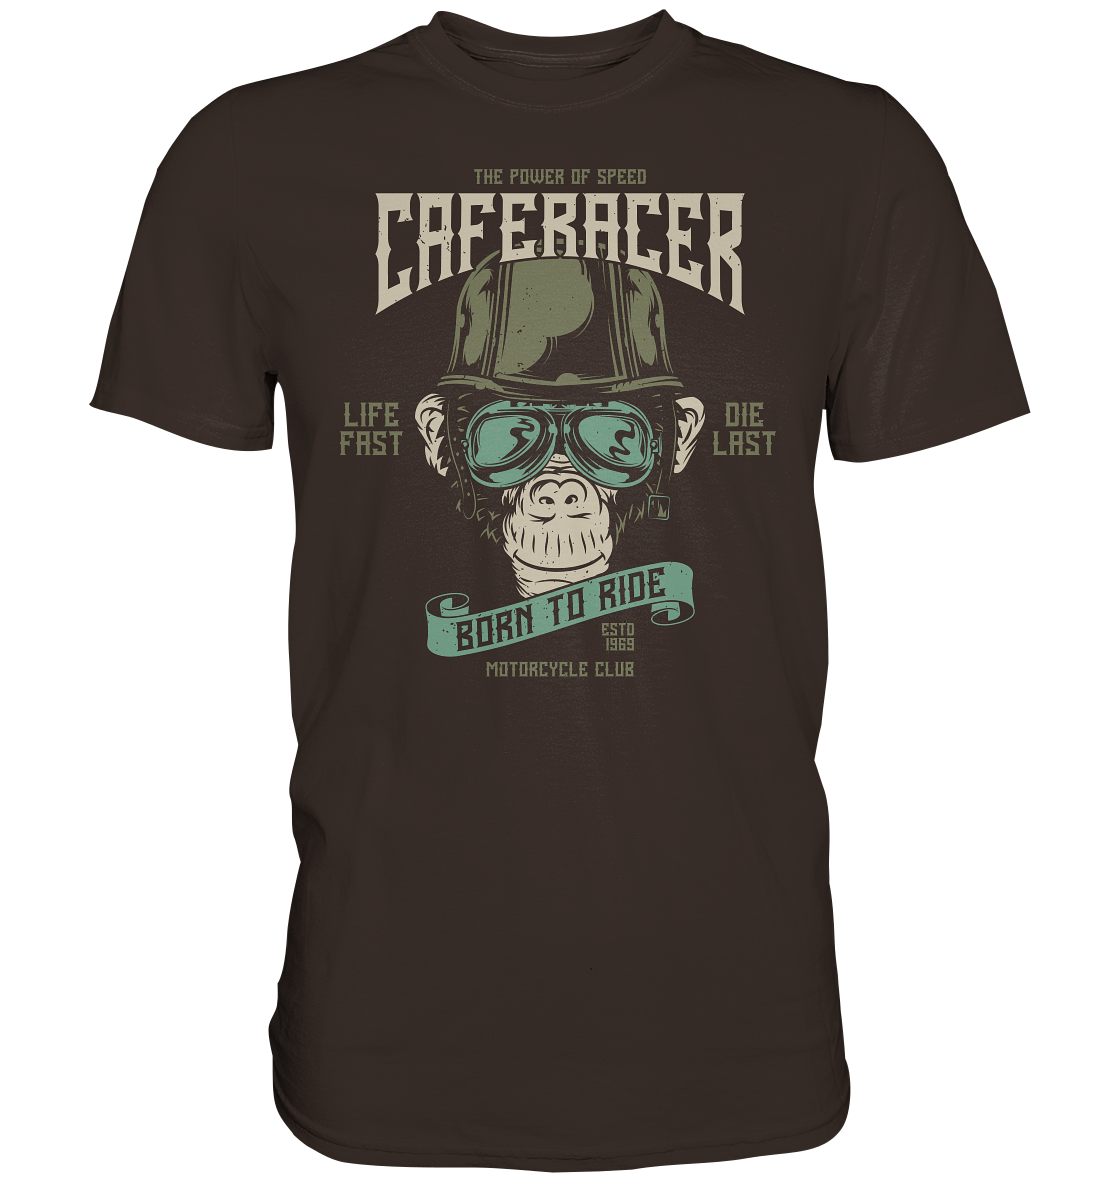 Affenkopf "Born to ride caferacer" - Premium unisex Shirt